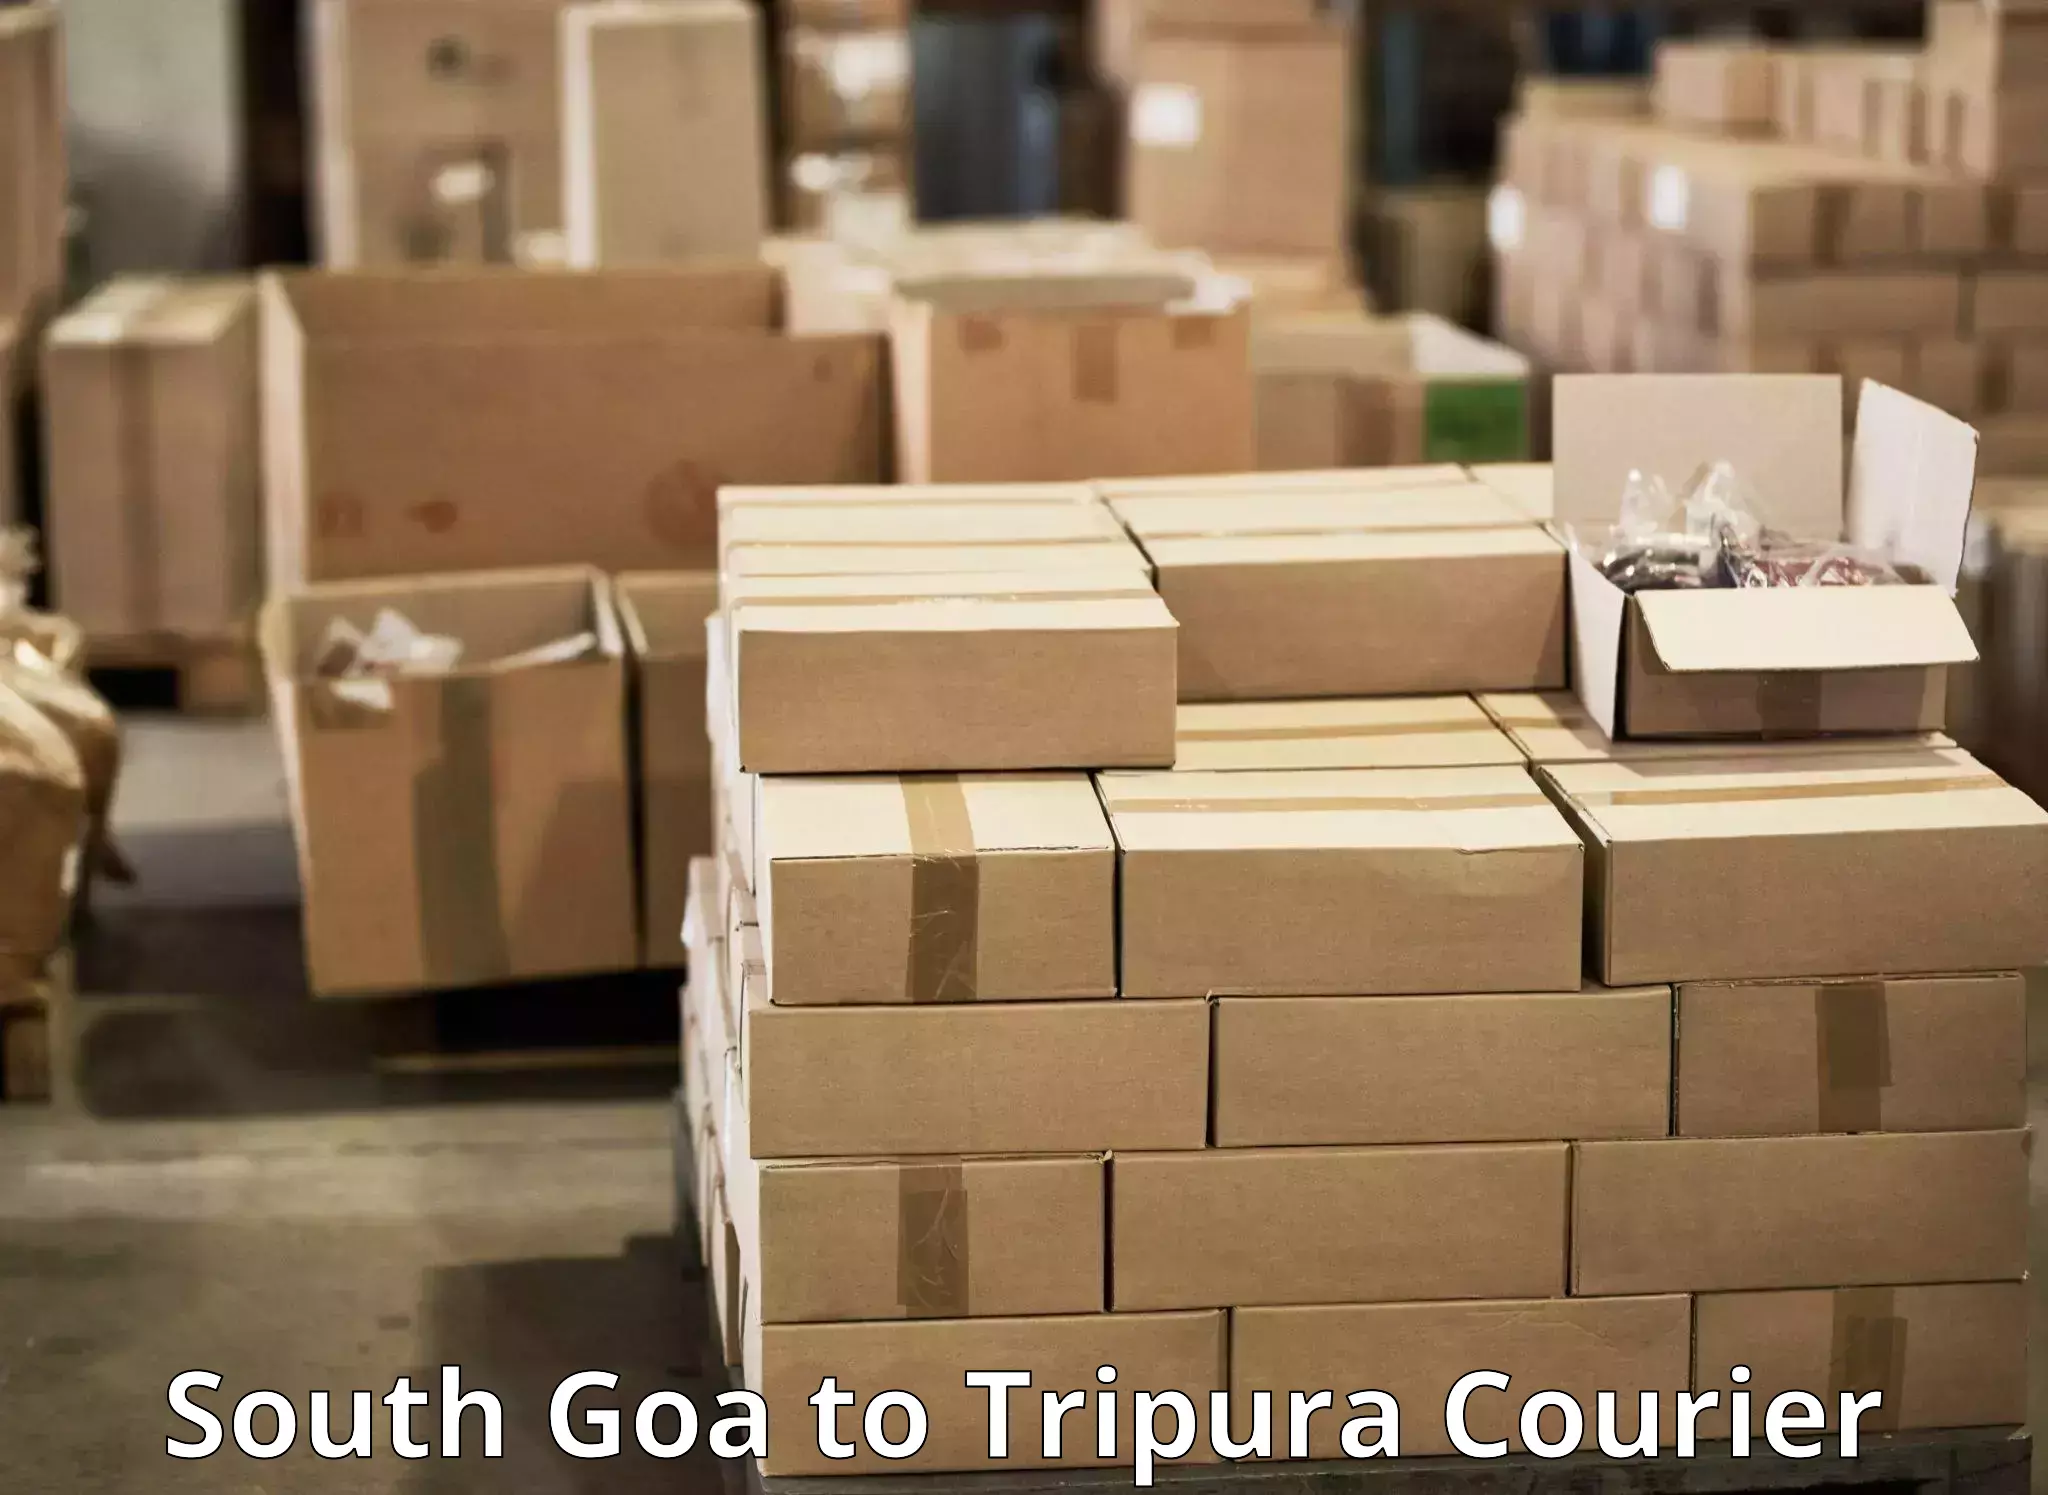 International courier networks South Goa to Tripura